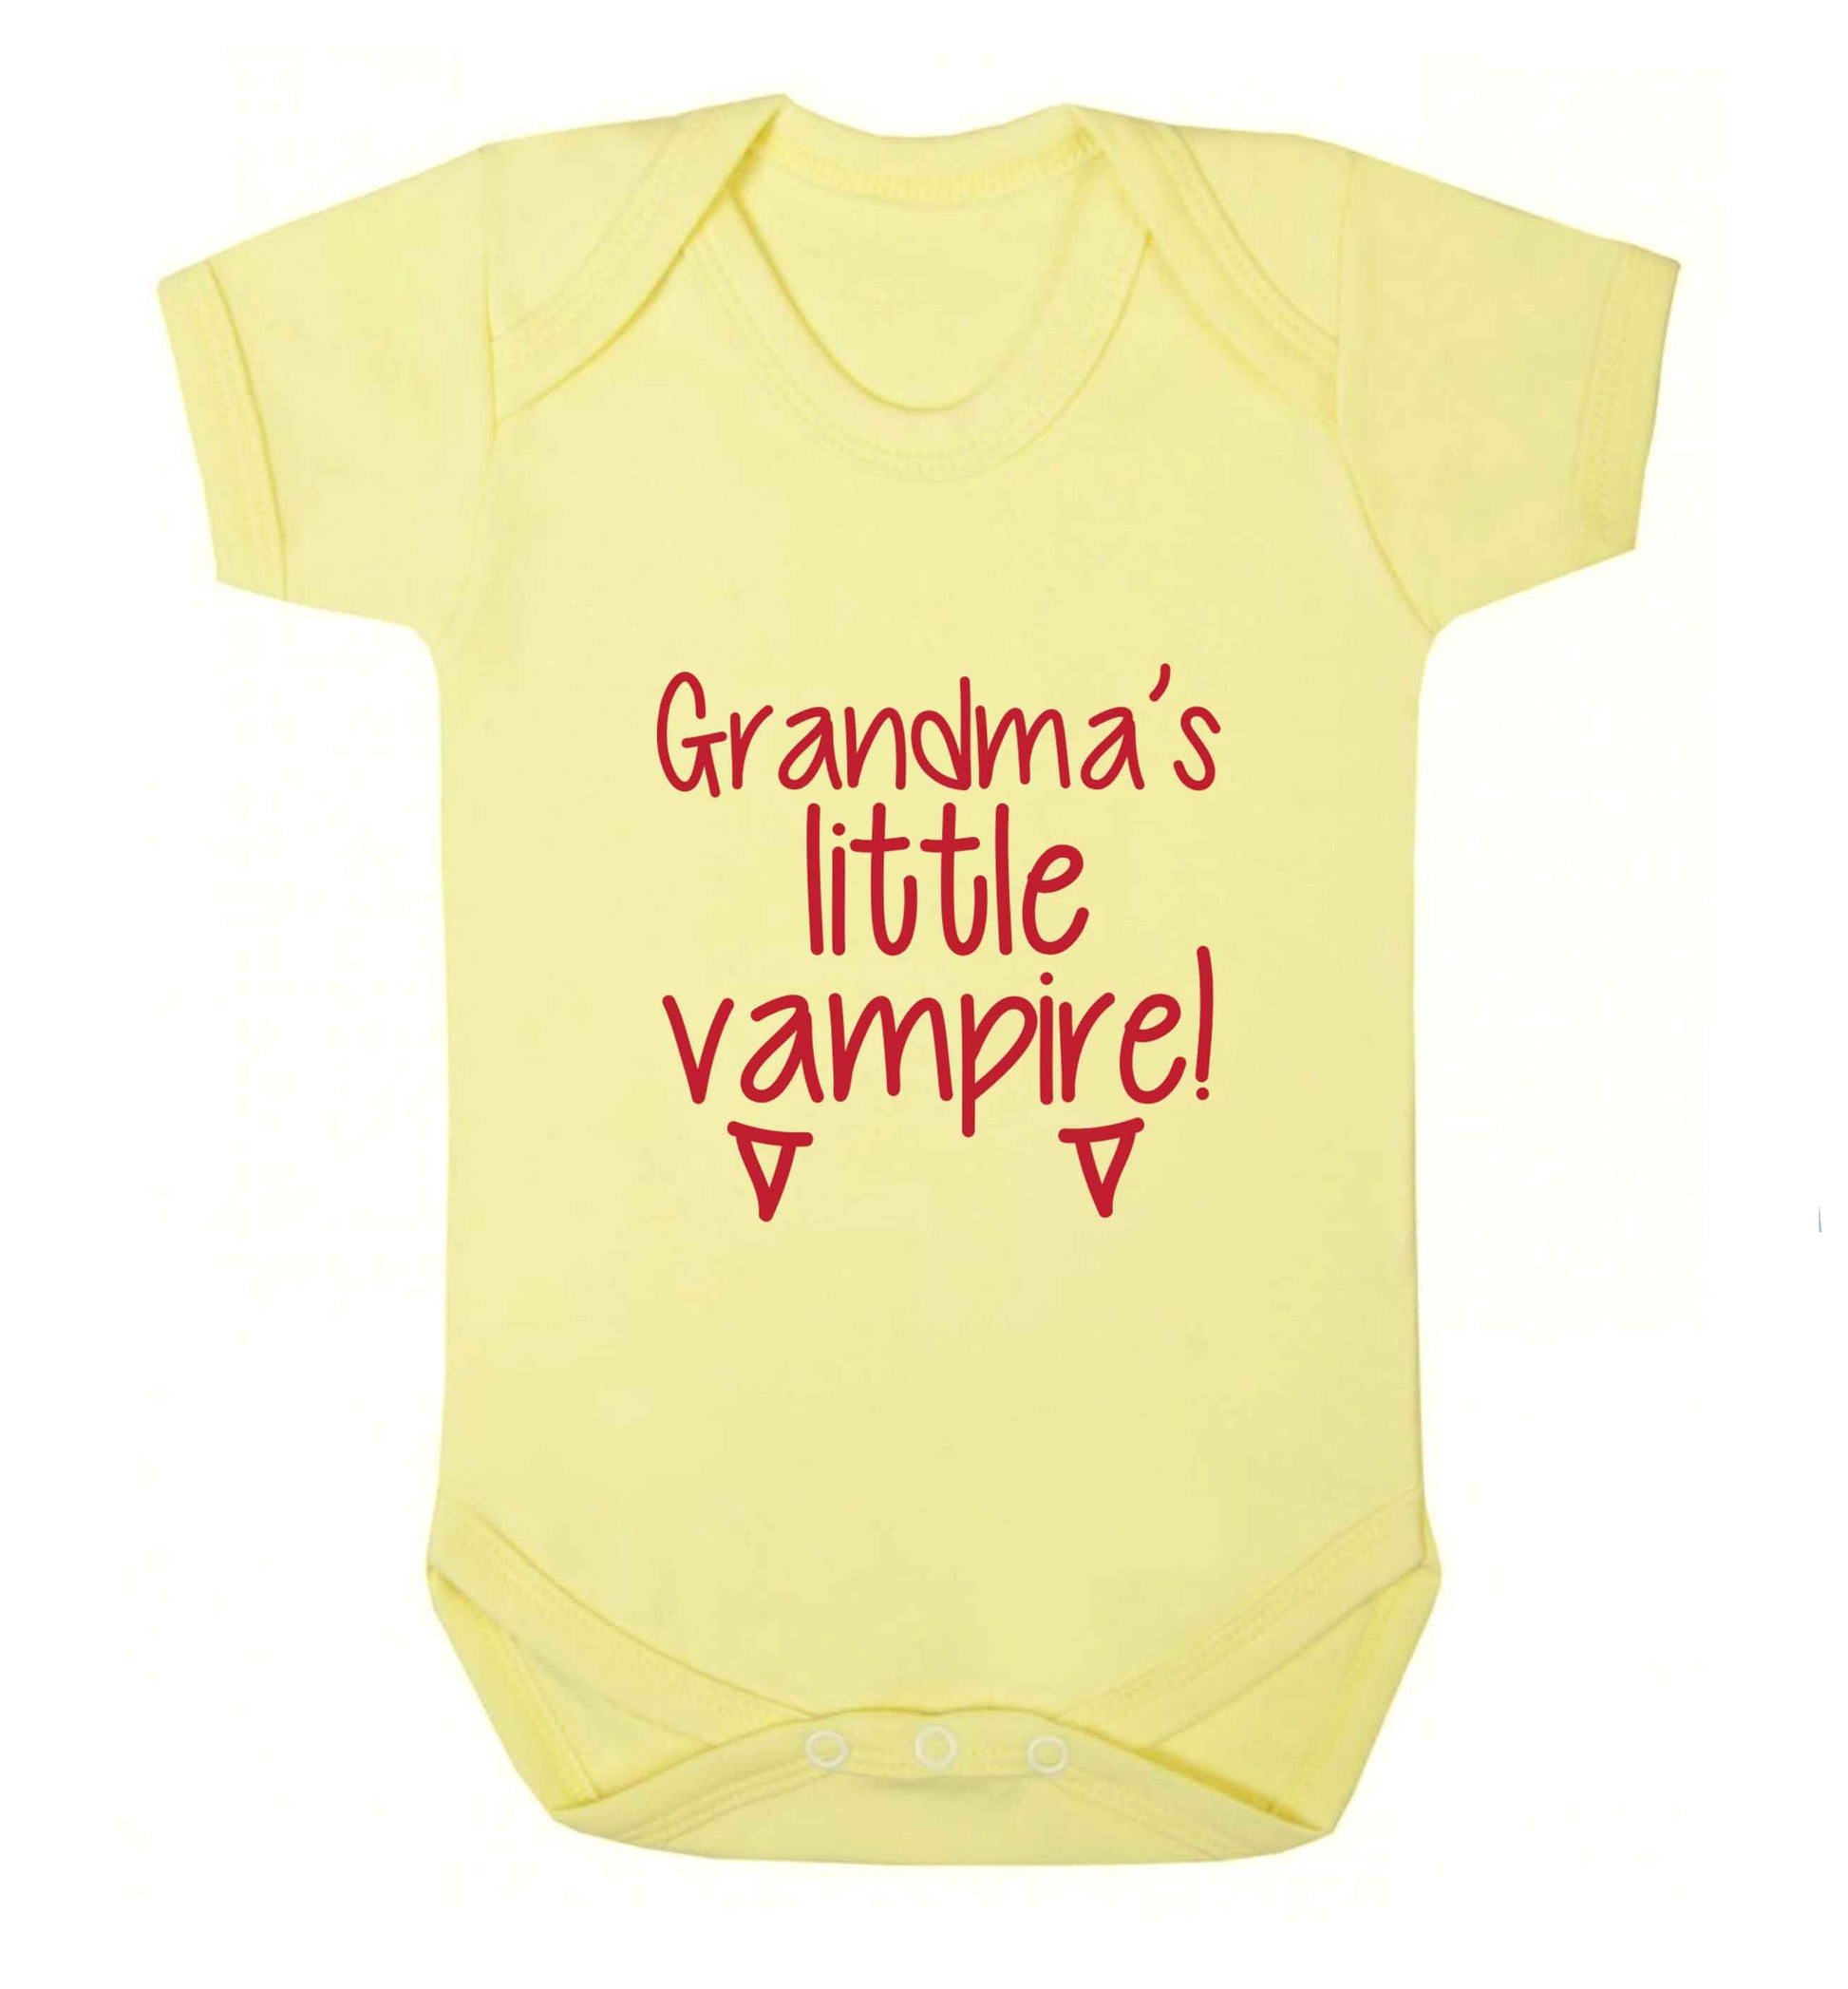 Grandma's little vampire baby vest pale yellow 18-24 months